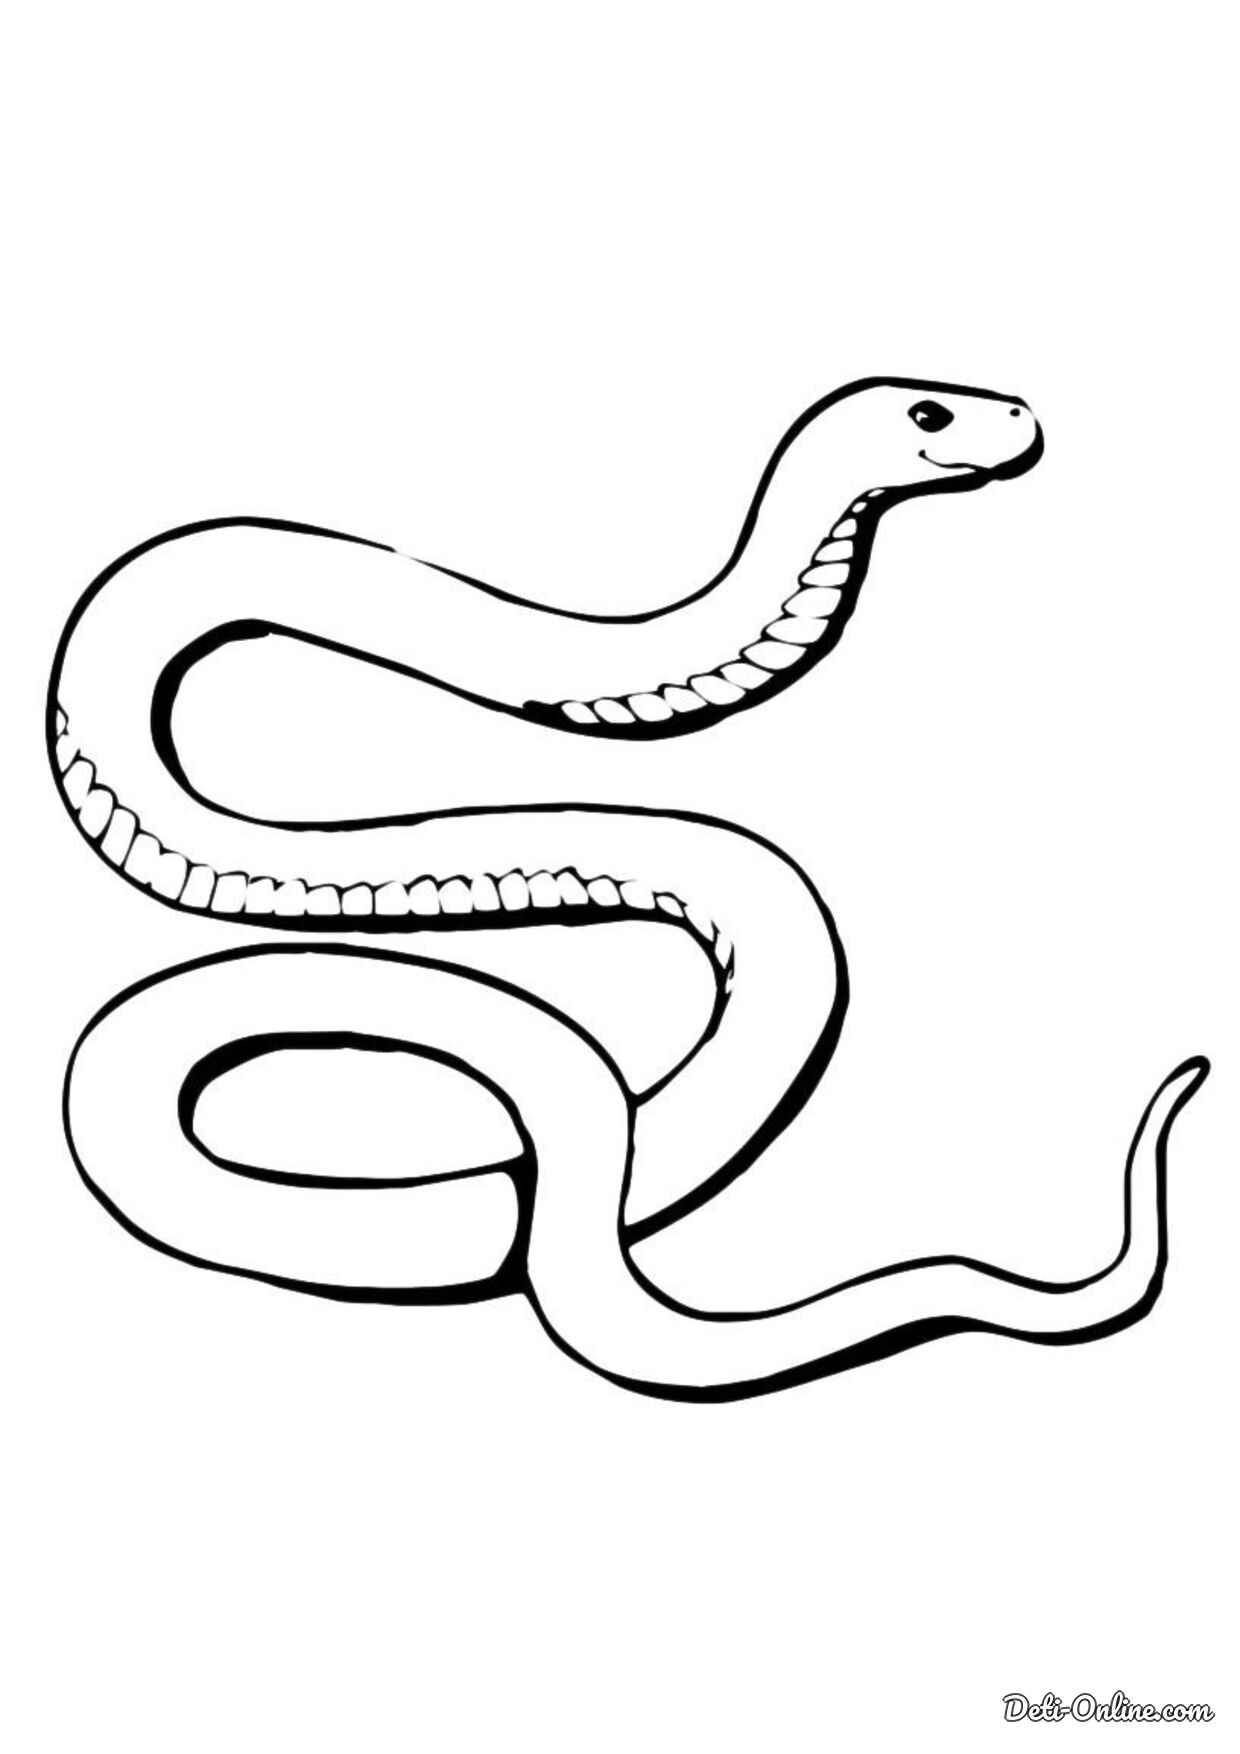 Раскраски змей распечатать. Змея раскраска. Раскраска змеи для детей. Змея раскраска для детей. Уж раскраска для детей.